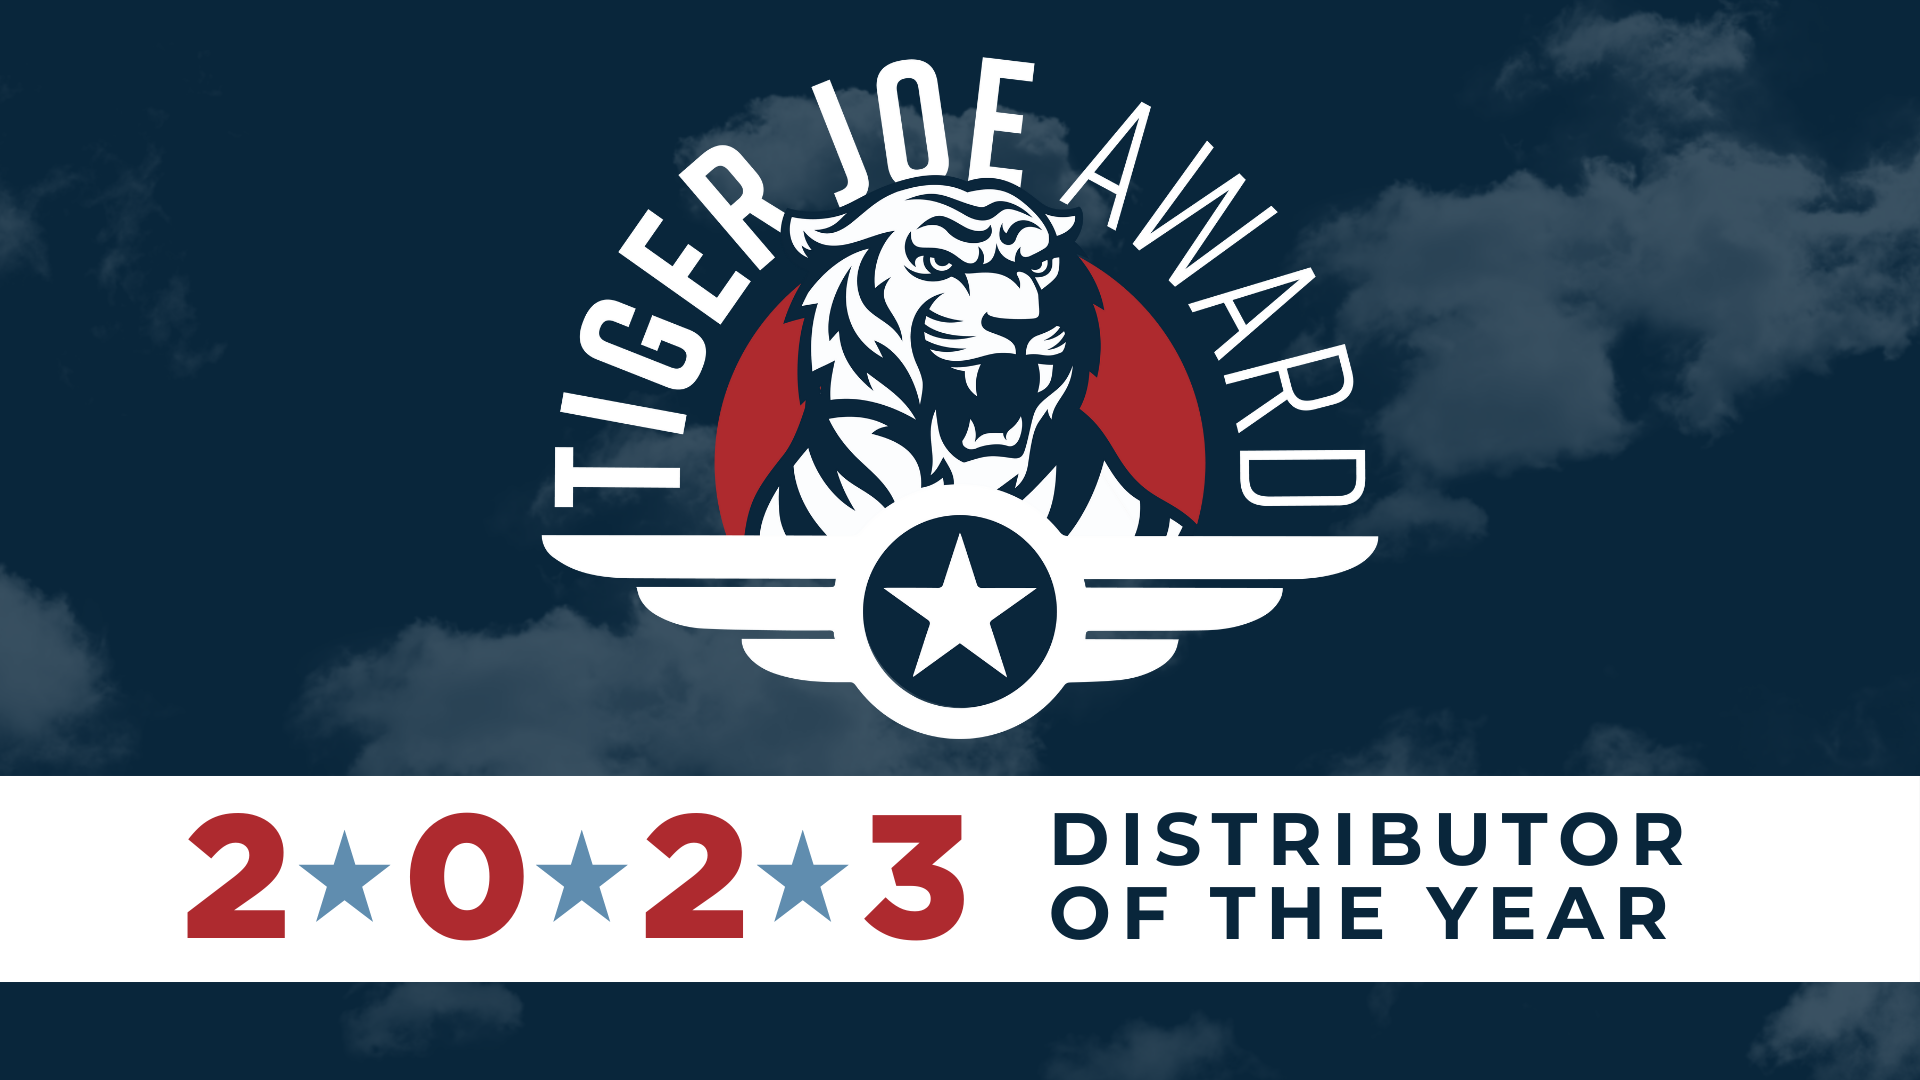 Tiger Joe Award logo with 2023 Distributor of the Year text